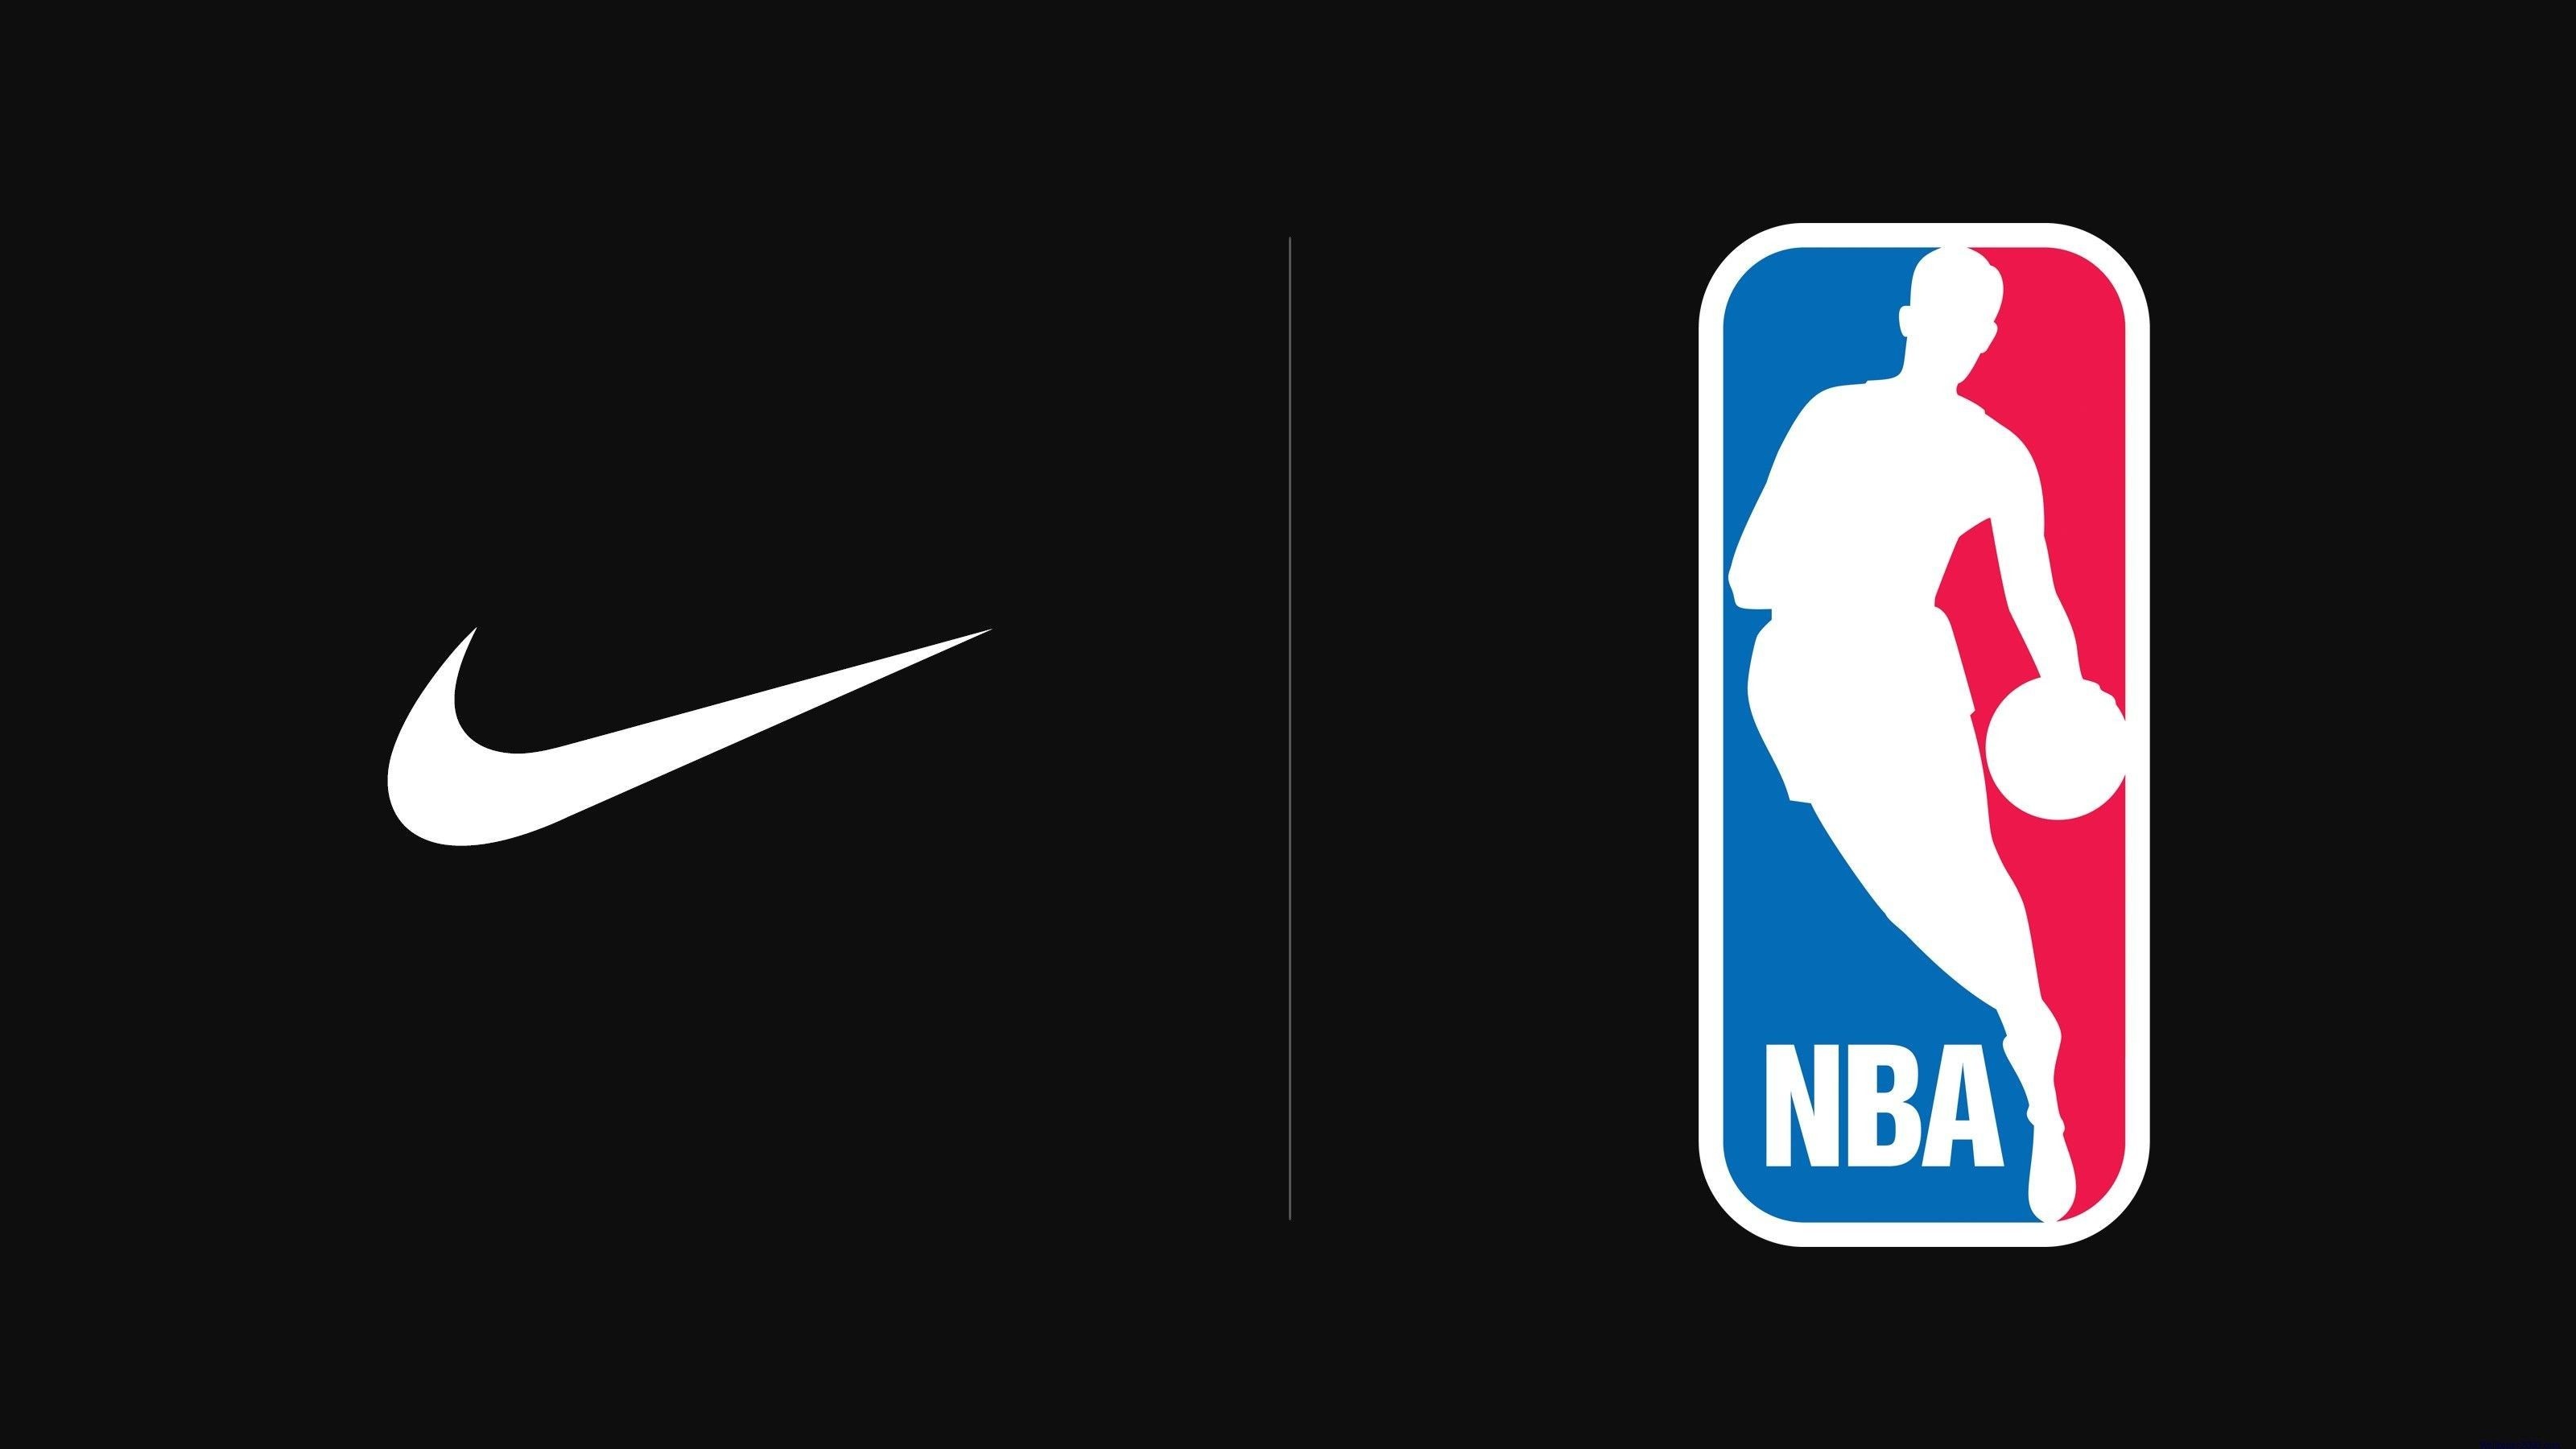 Cool NBA logo wallpapers, Creative designs, Stylish backgrounds, Basketball art, 3200x1800 HD Desktop